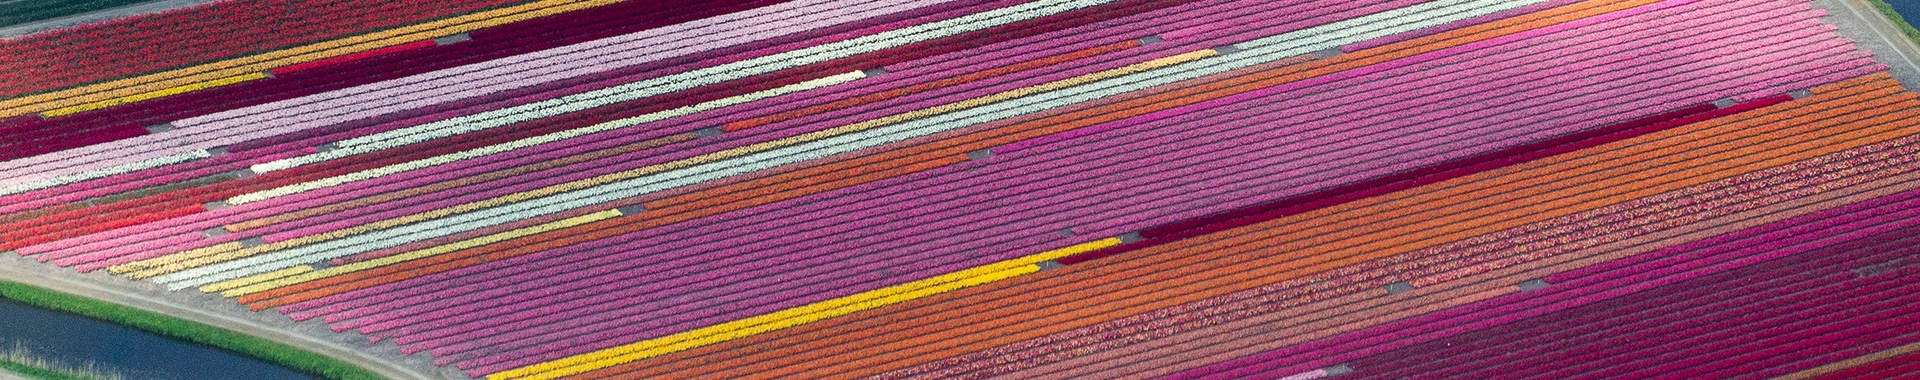 aerial photo of a flower farm